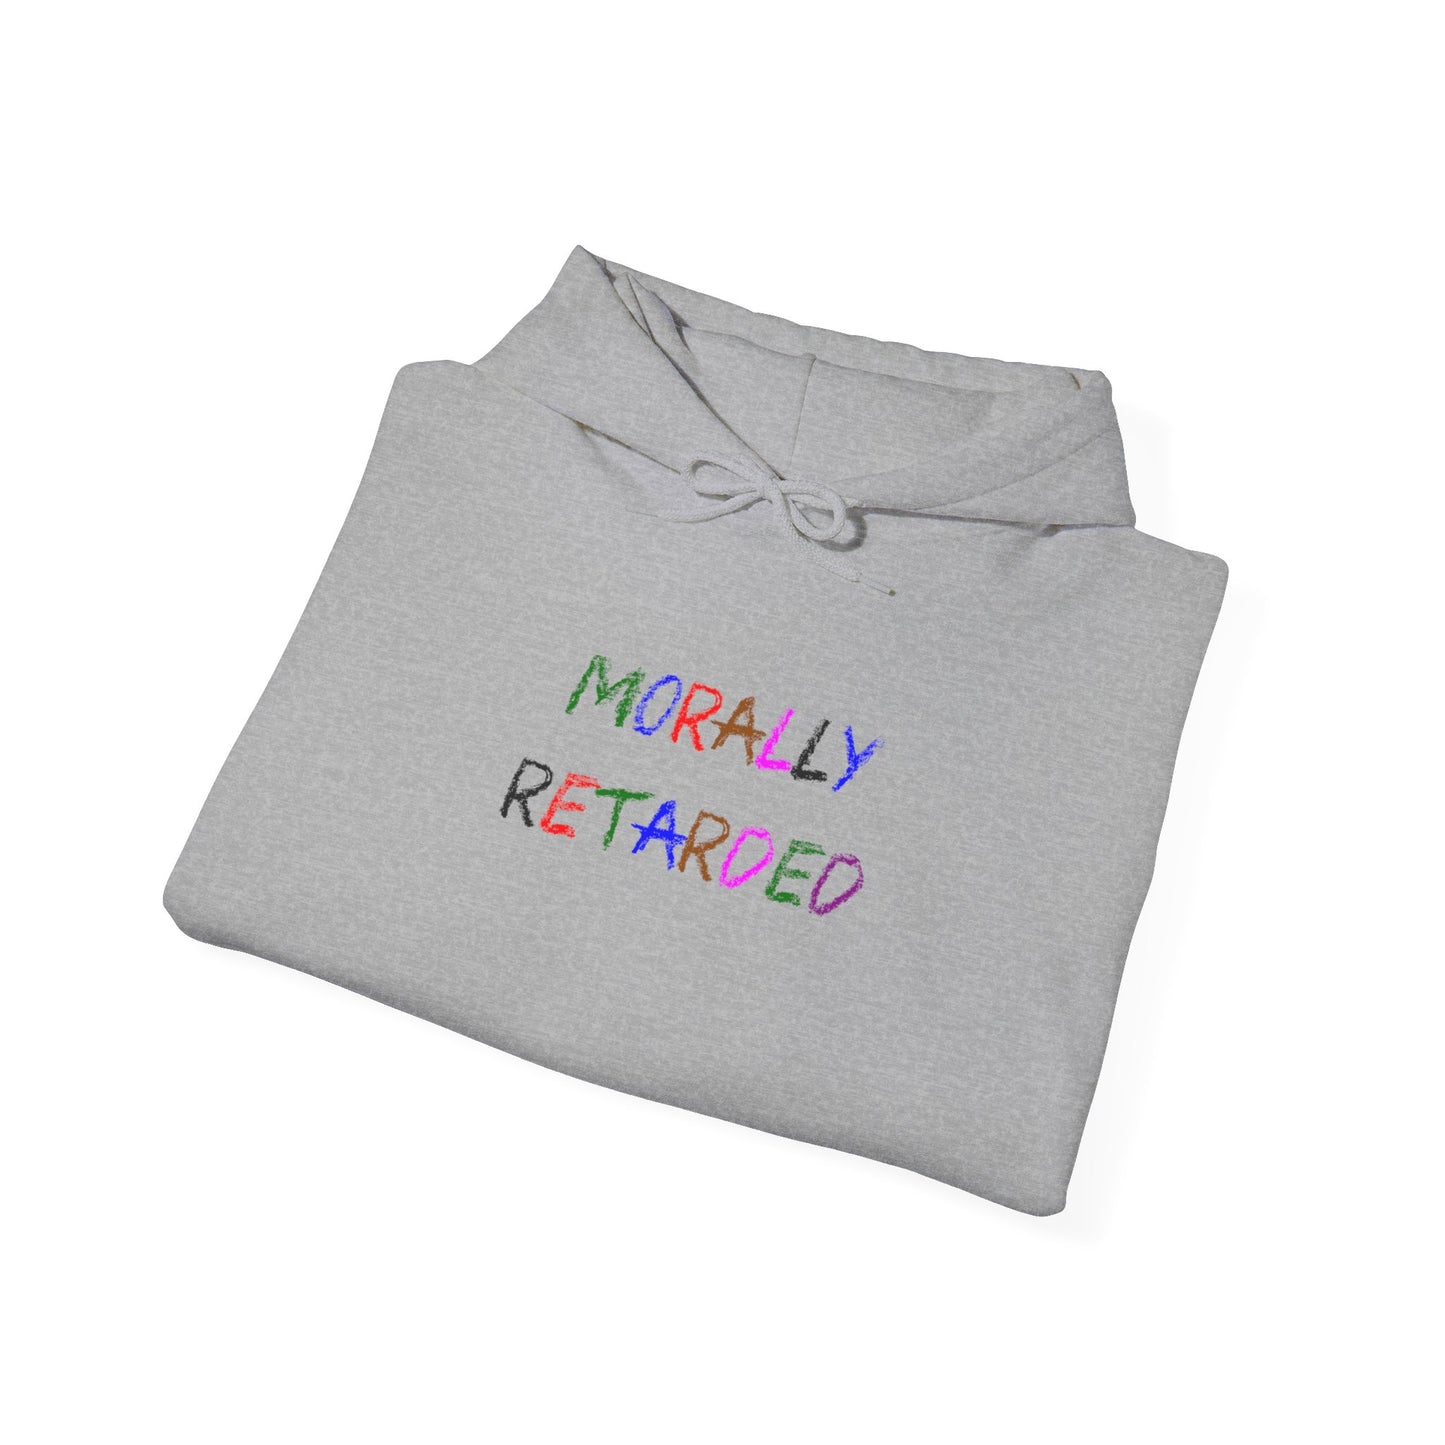 Morally Retarded - Hooded Sweatshirt